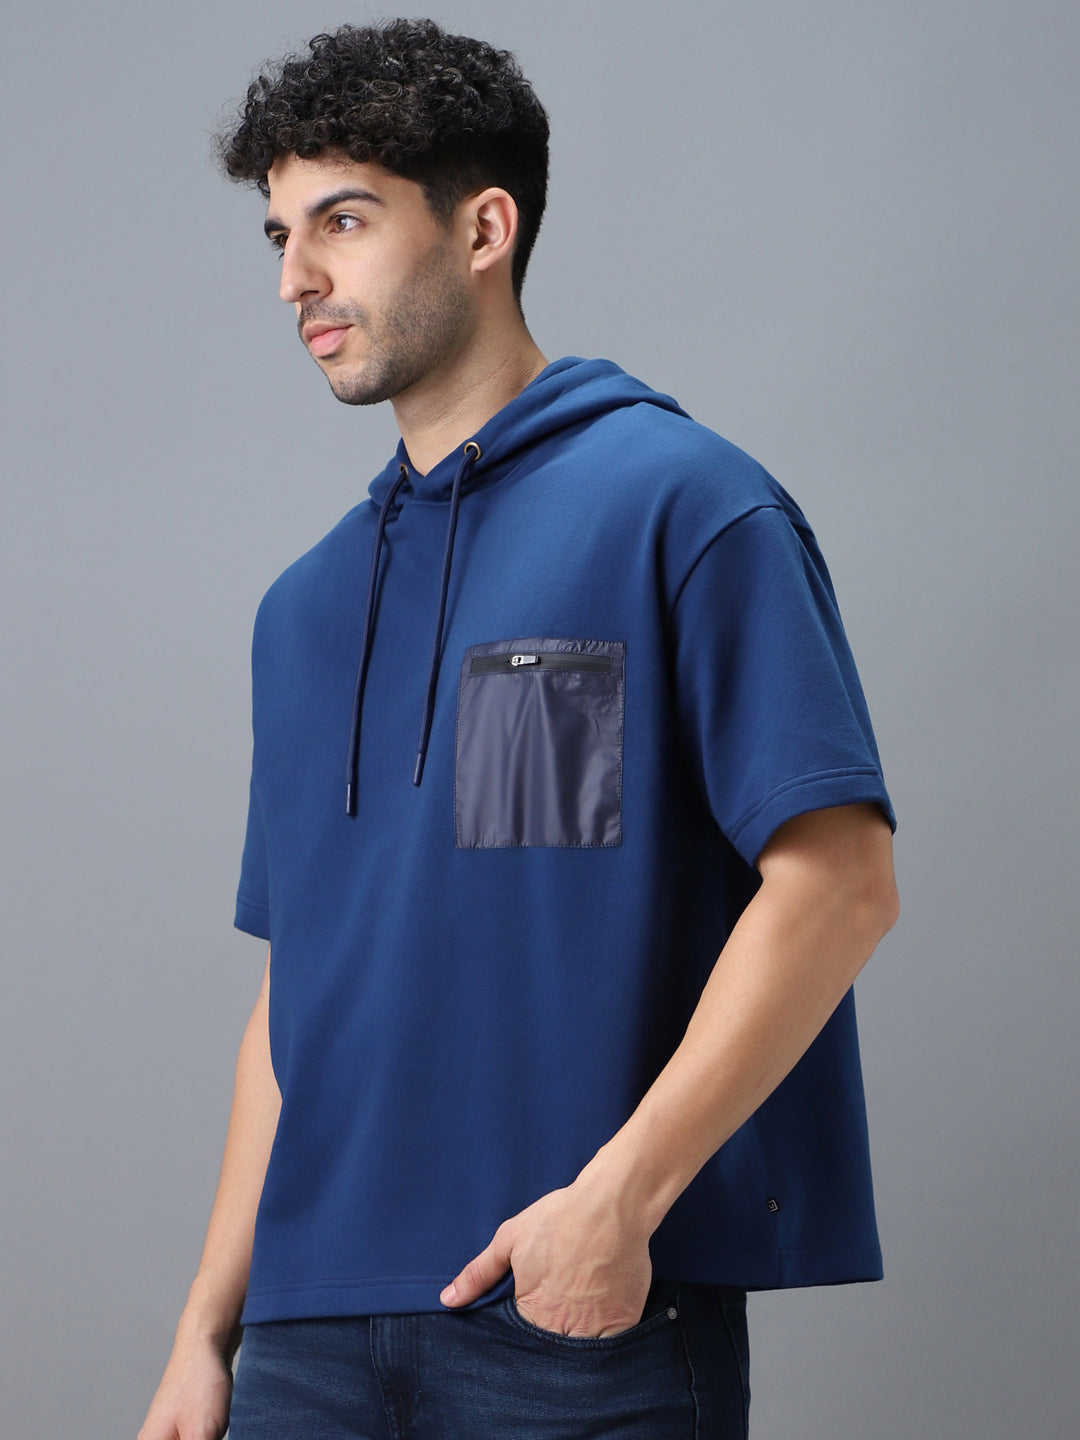 Men's Blue Cotton Solid Oversized Hooded Neck Sweatshirt